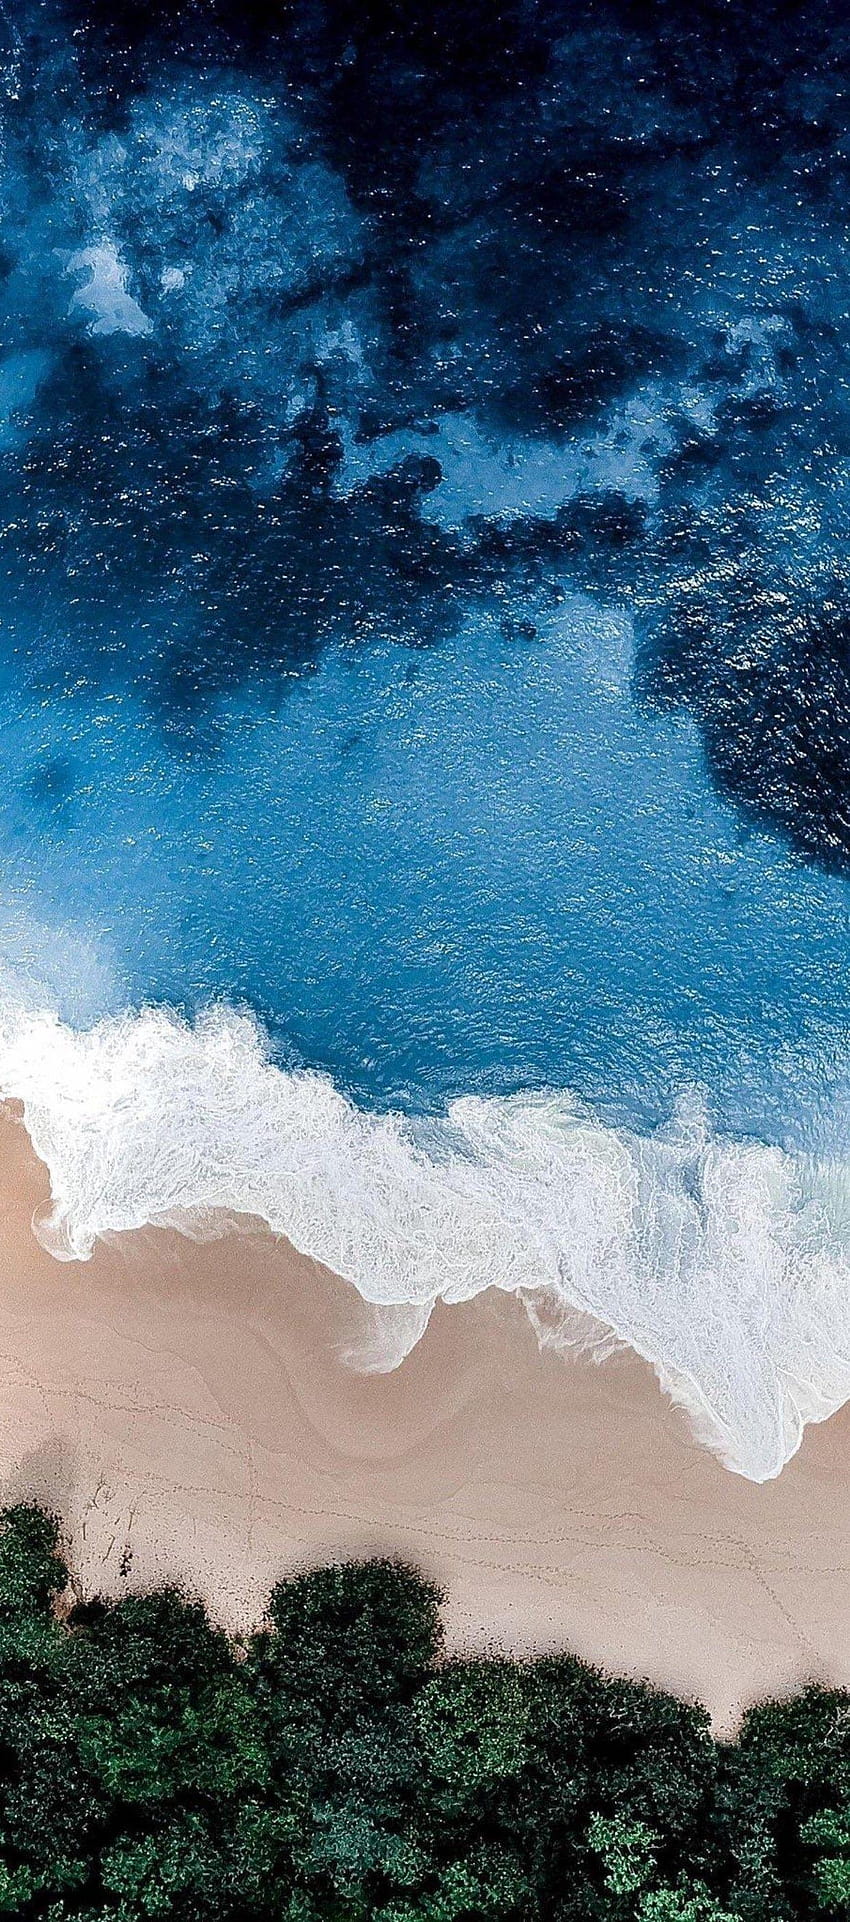 turquoise waves in the ocean 4K wallpaper download